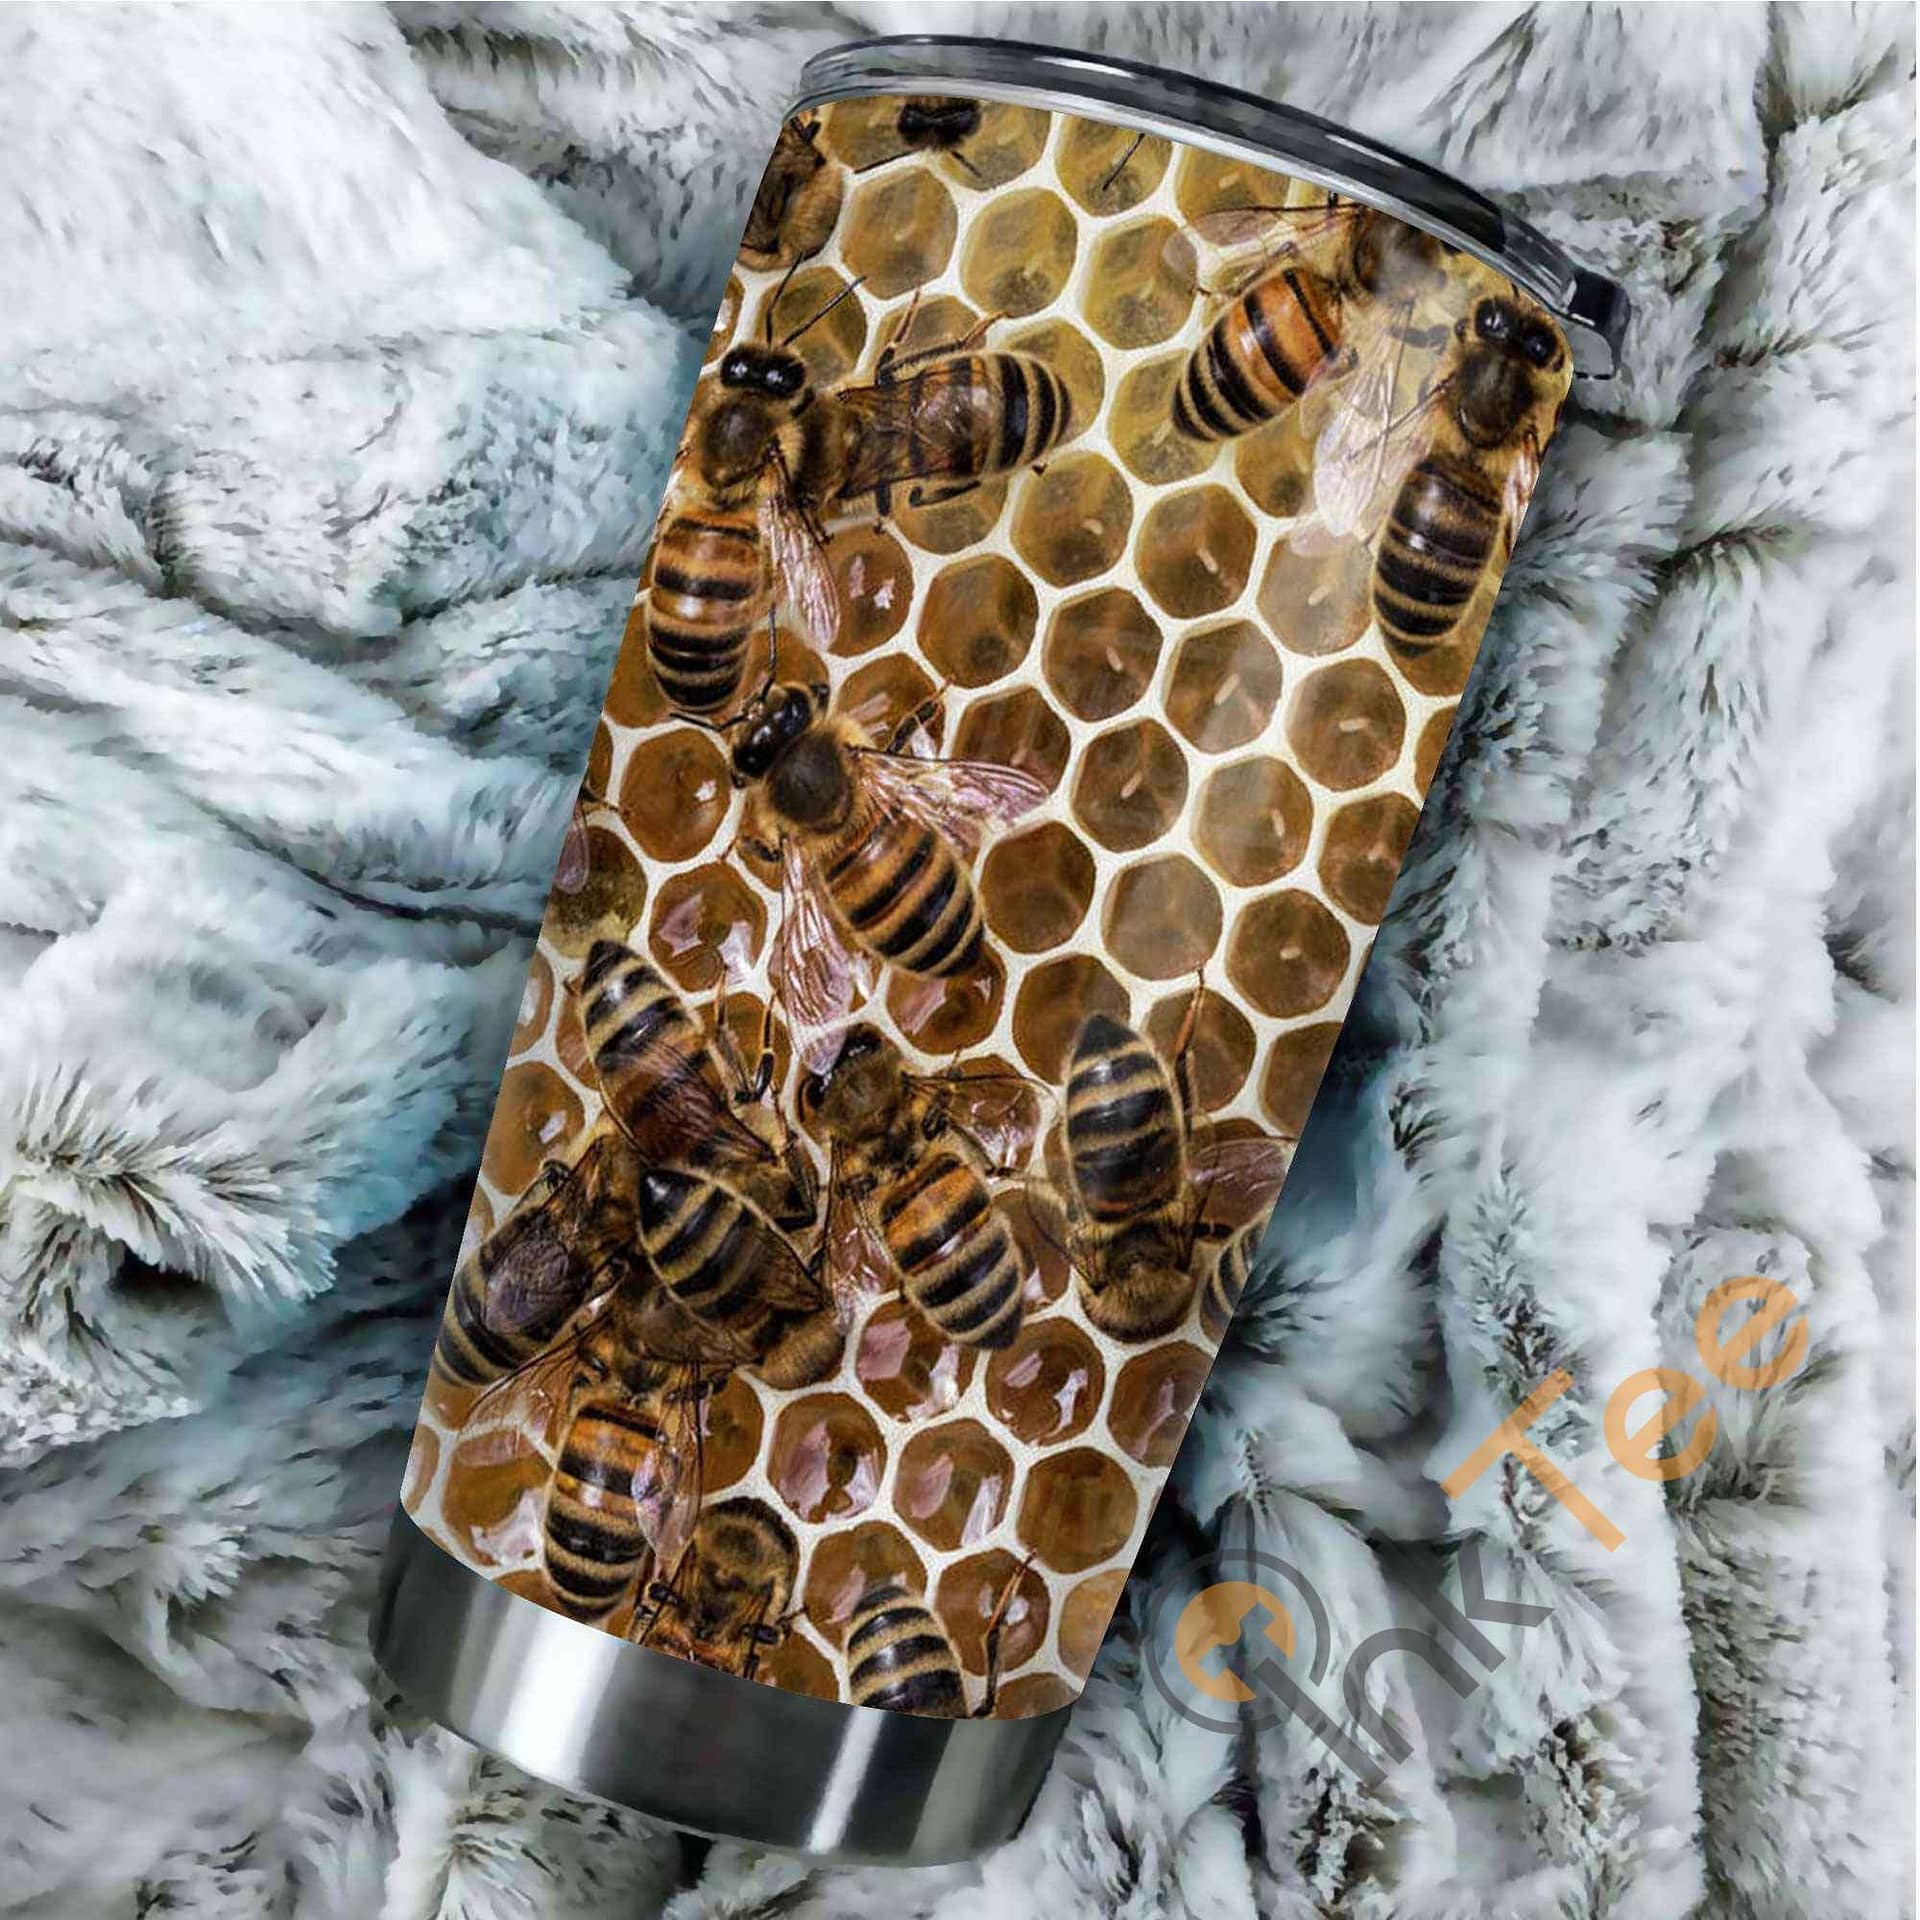 Bees Hive Amazon Best Seller Sku 2522 Stainless Steel Tumbler